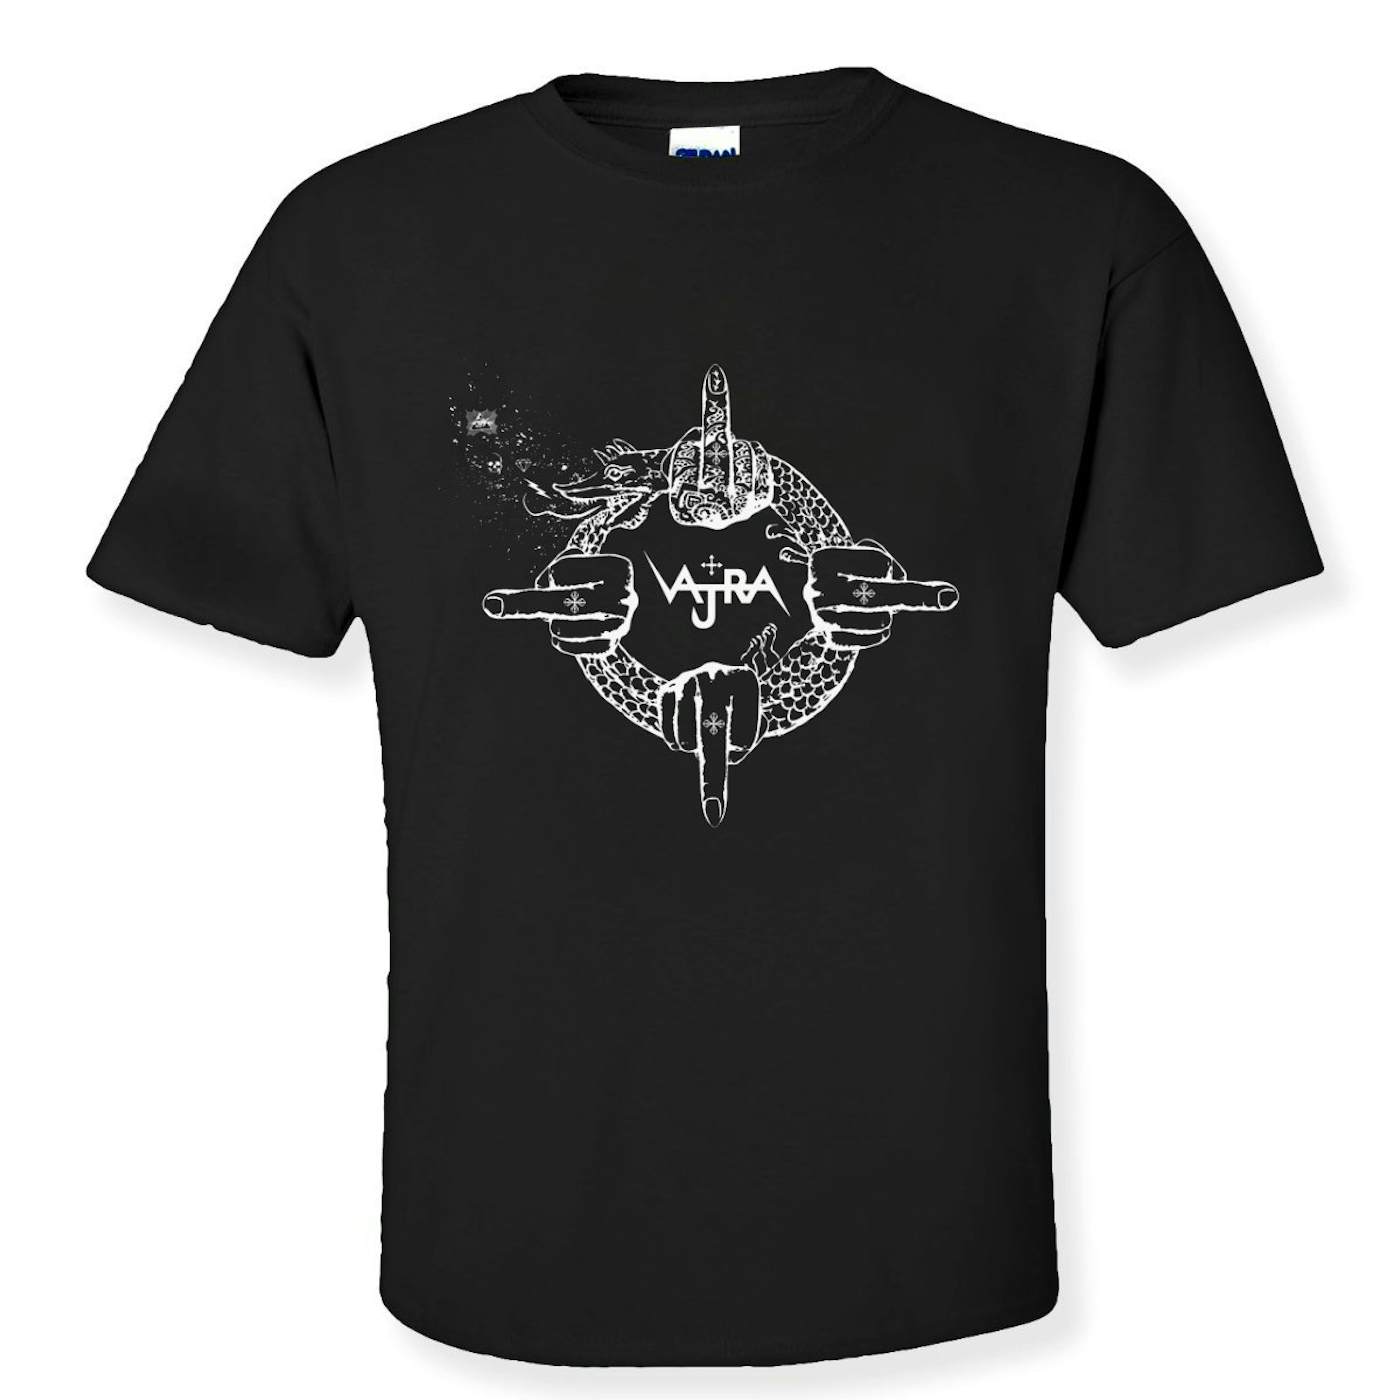 Vajra White and Black Ouroboros Unisex T-Shirt